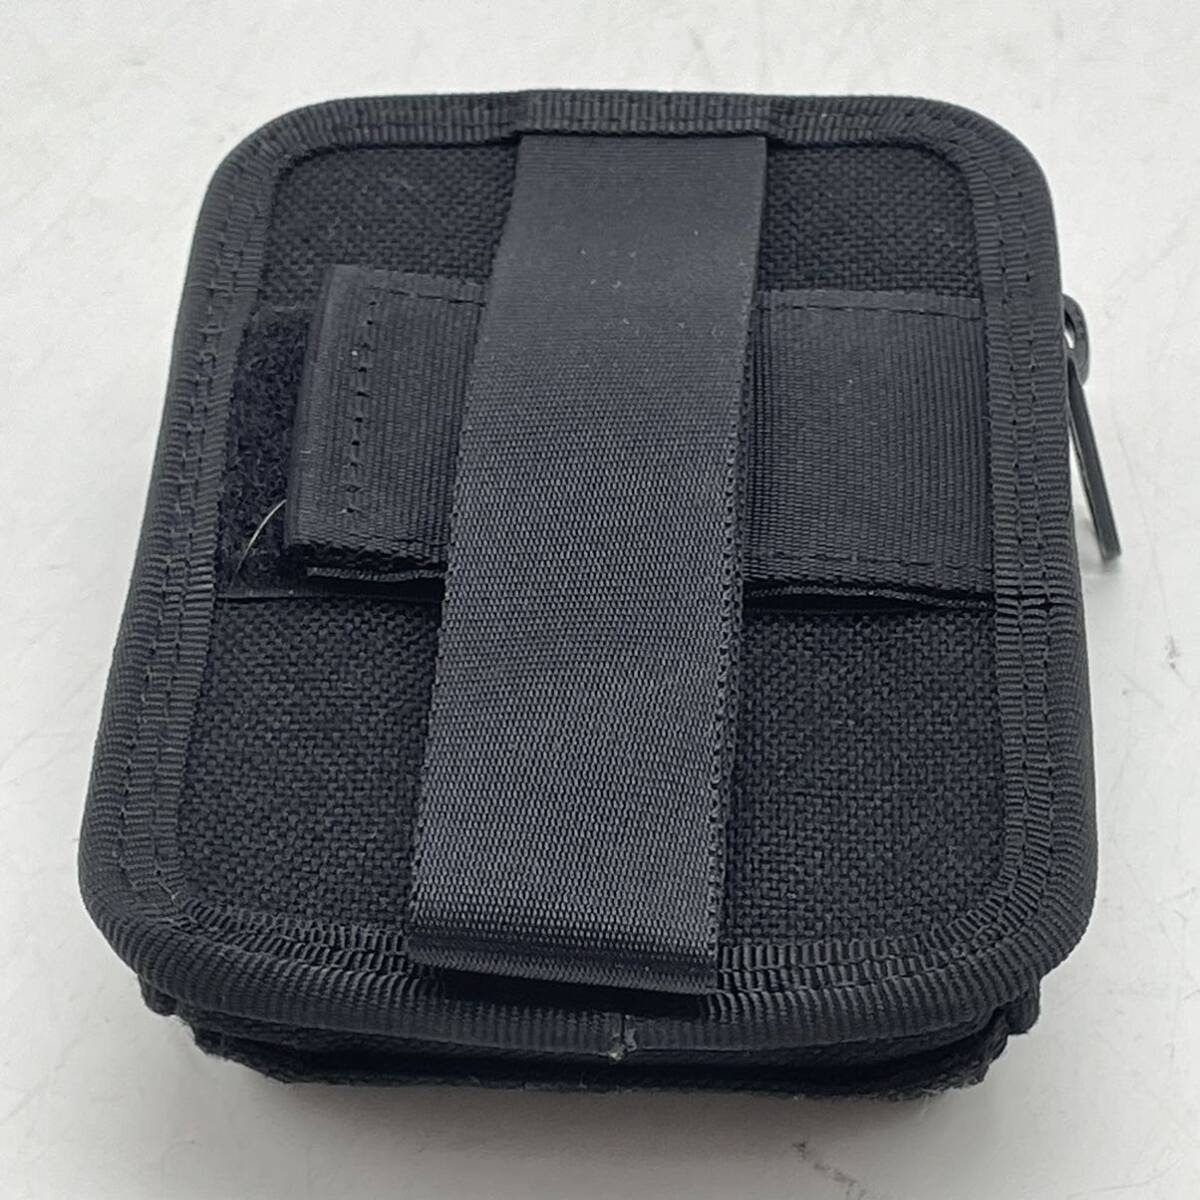 KO1861*POTER Porter mobile case multi pouch belt pouch inside side nappy material black digital camera electron cigarettes 